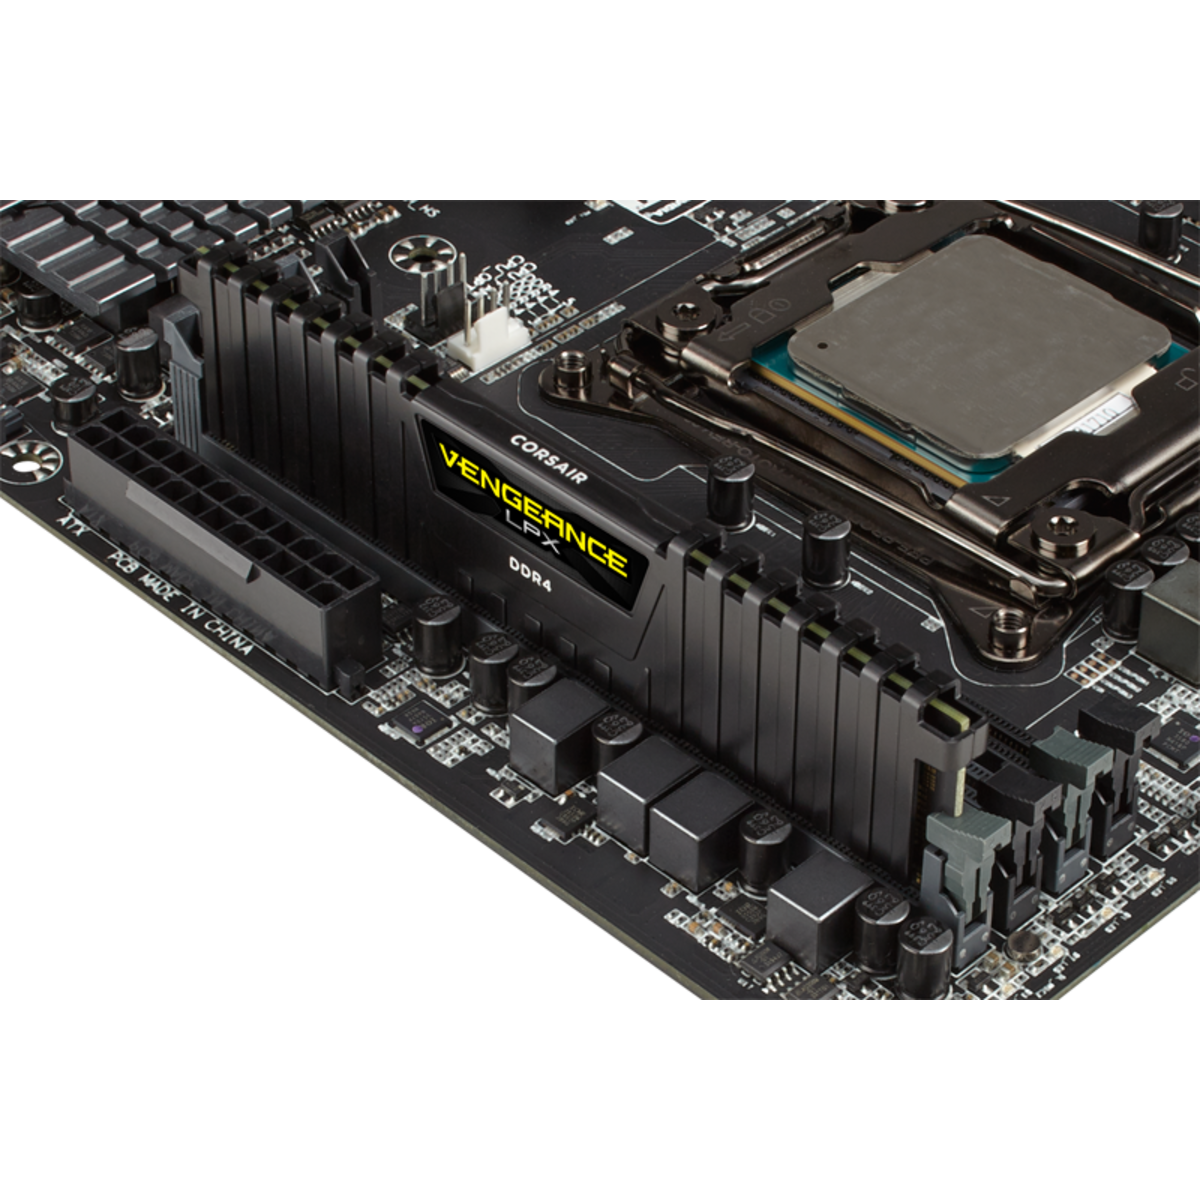 Corsair Vengeance LPX 16GB (2x8GB) DDR4 DRAM 3000MHz C15 Desktop Memory Kit  - Black (CMK16GX4M2B3000C15)